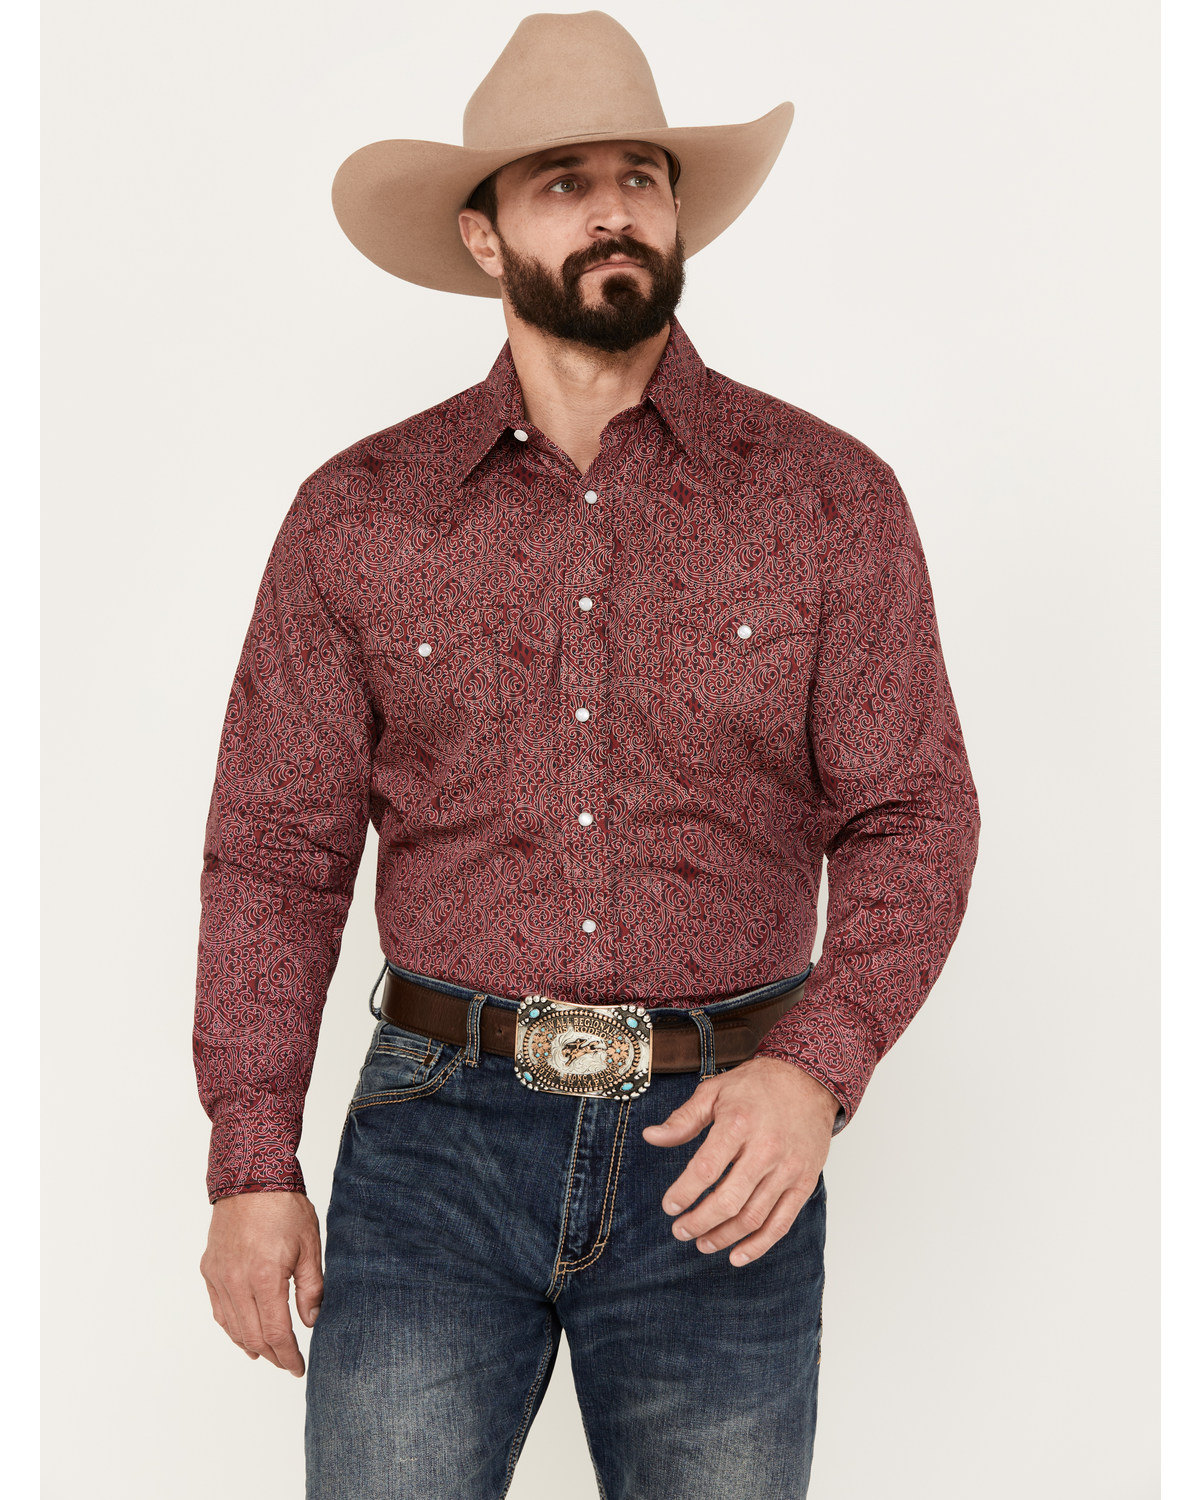 Rough Stock by Panhandle Men's Paisley Geo Print Long Sleeve Pearl Snap Western Shirt